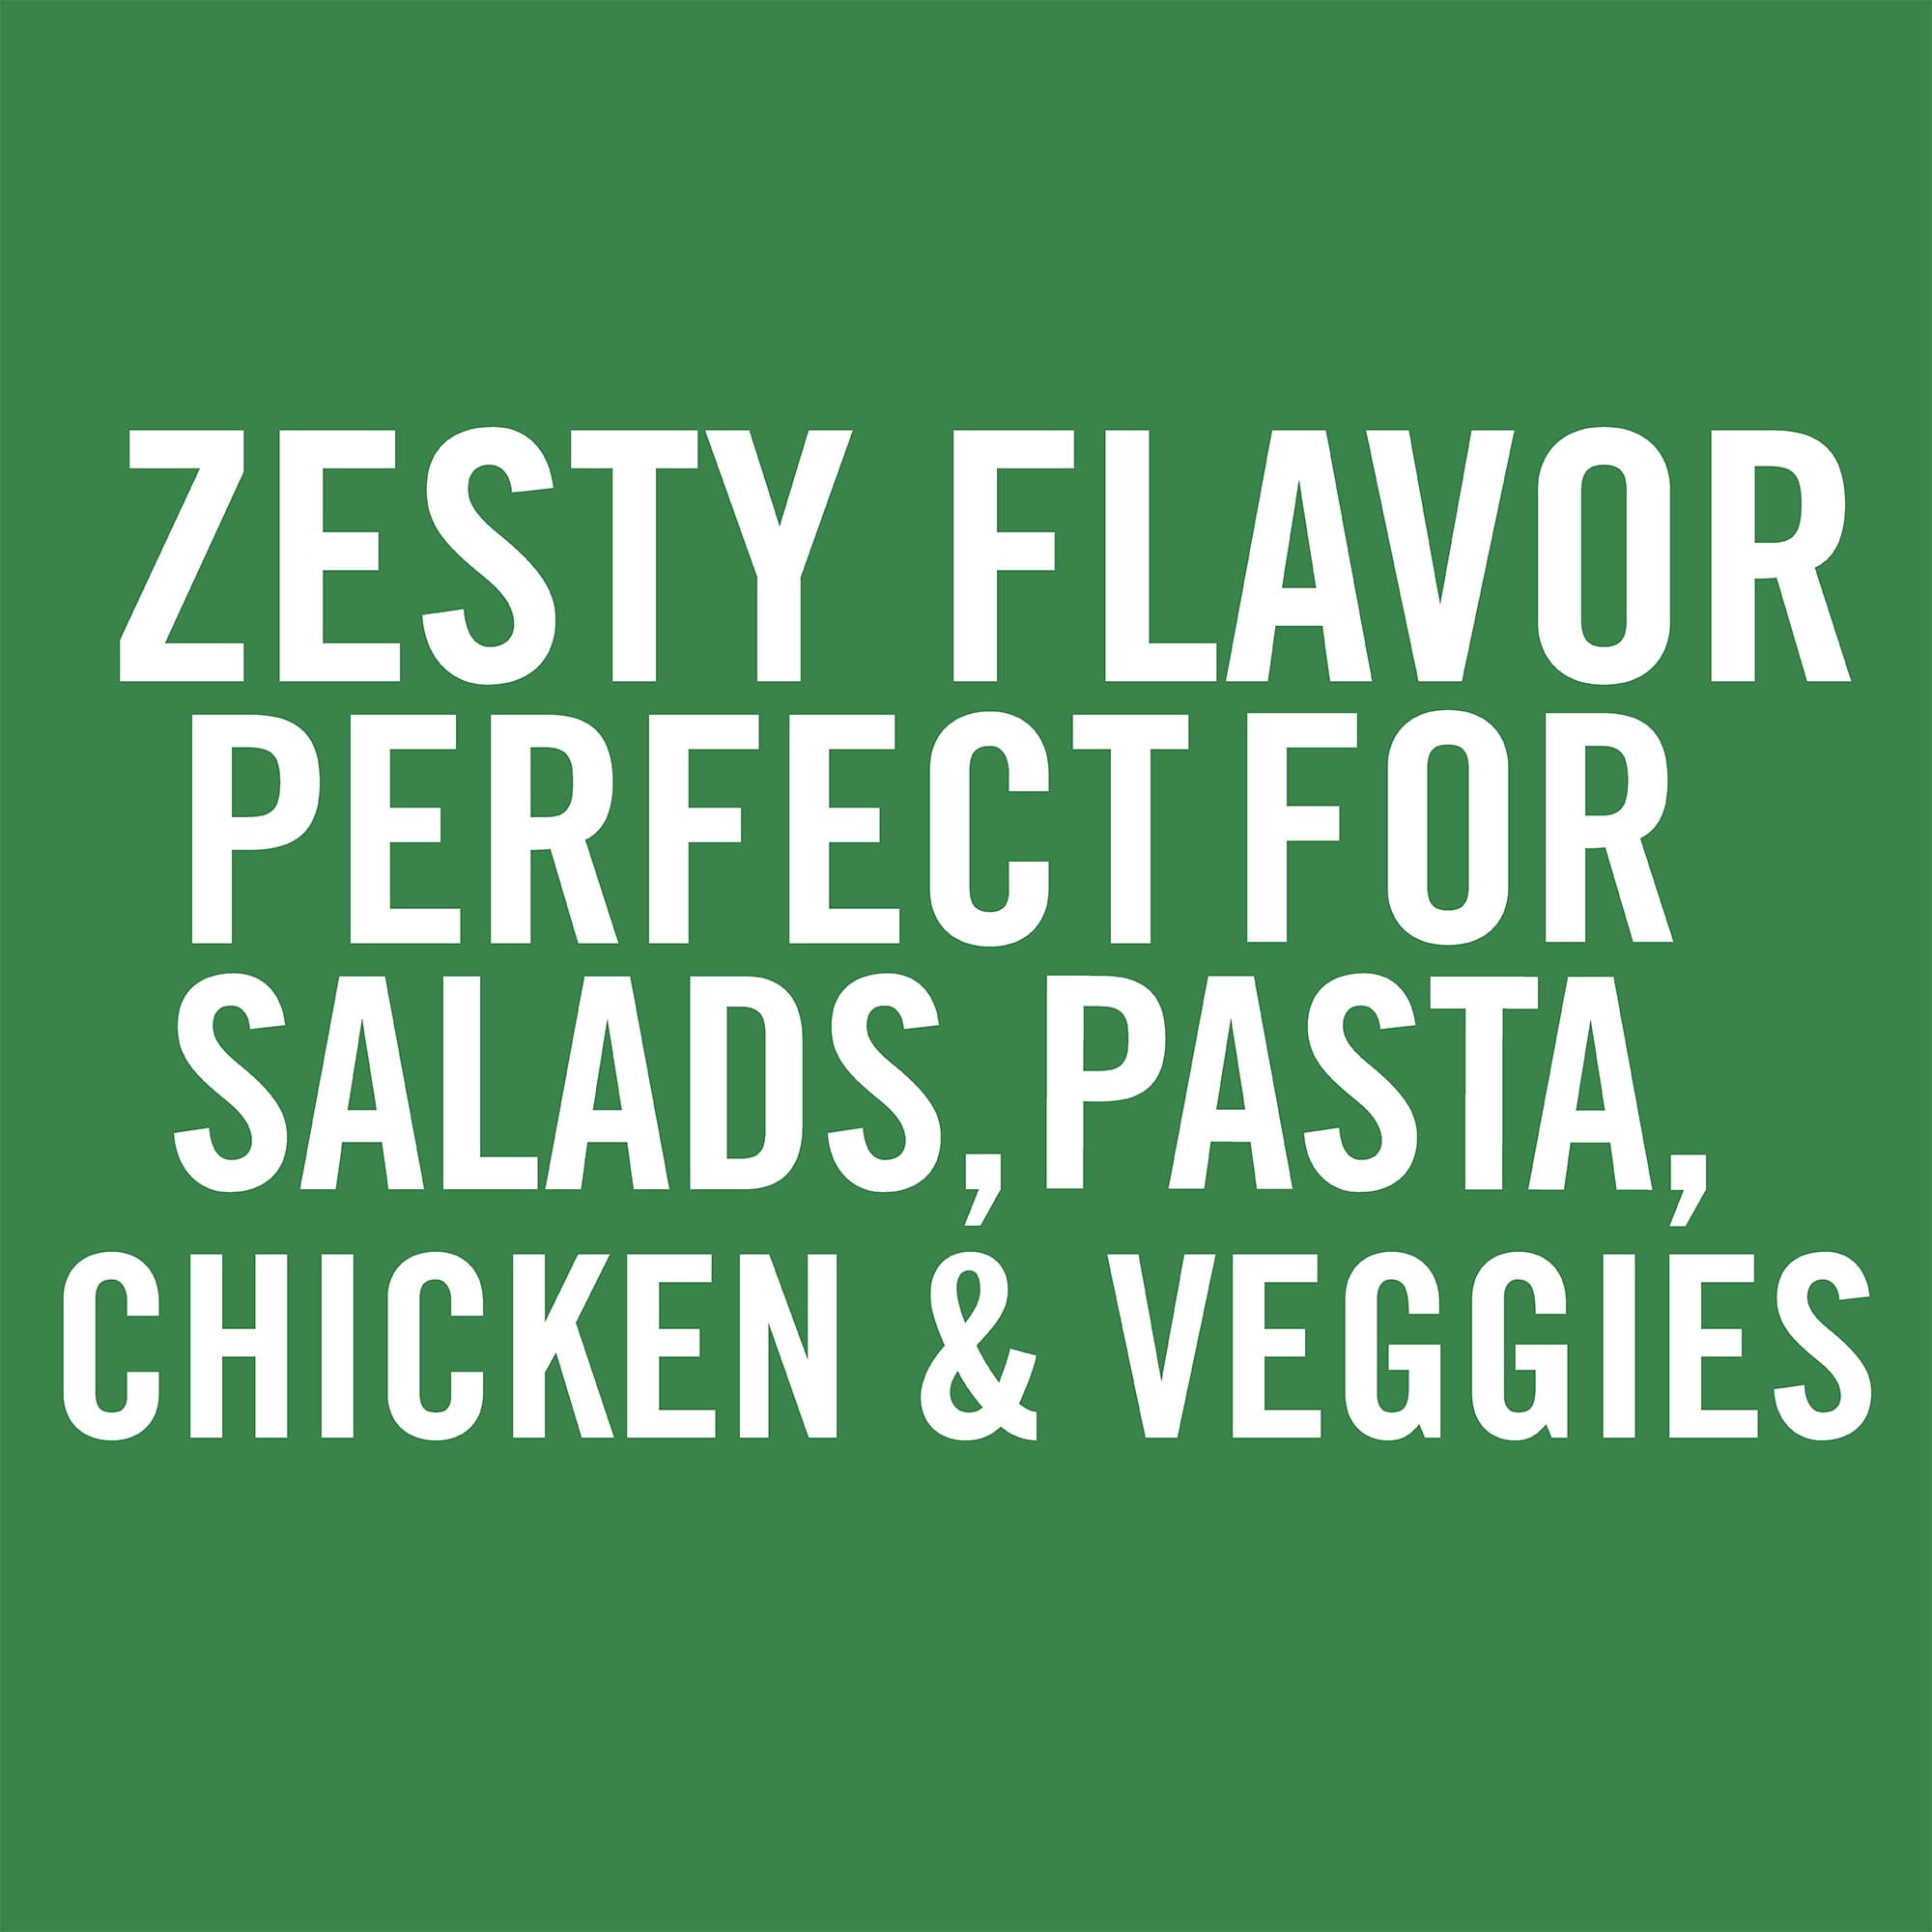 McCormick Perfect Pinch Salad Supreme, 2.62 Oz Reviews 2023